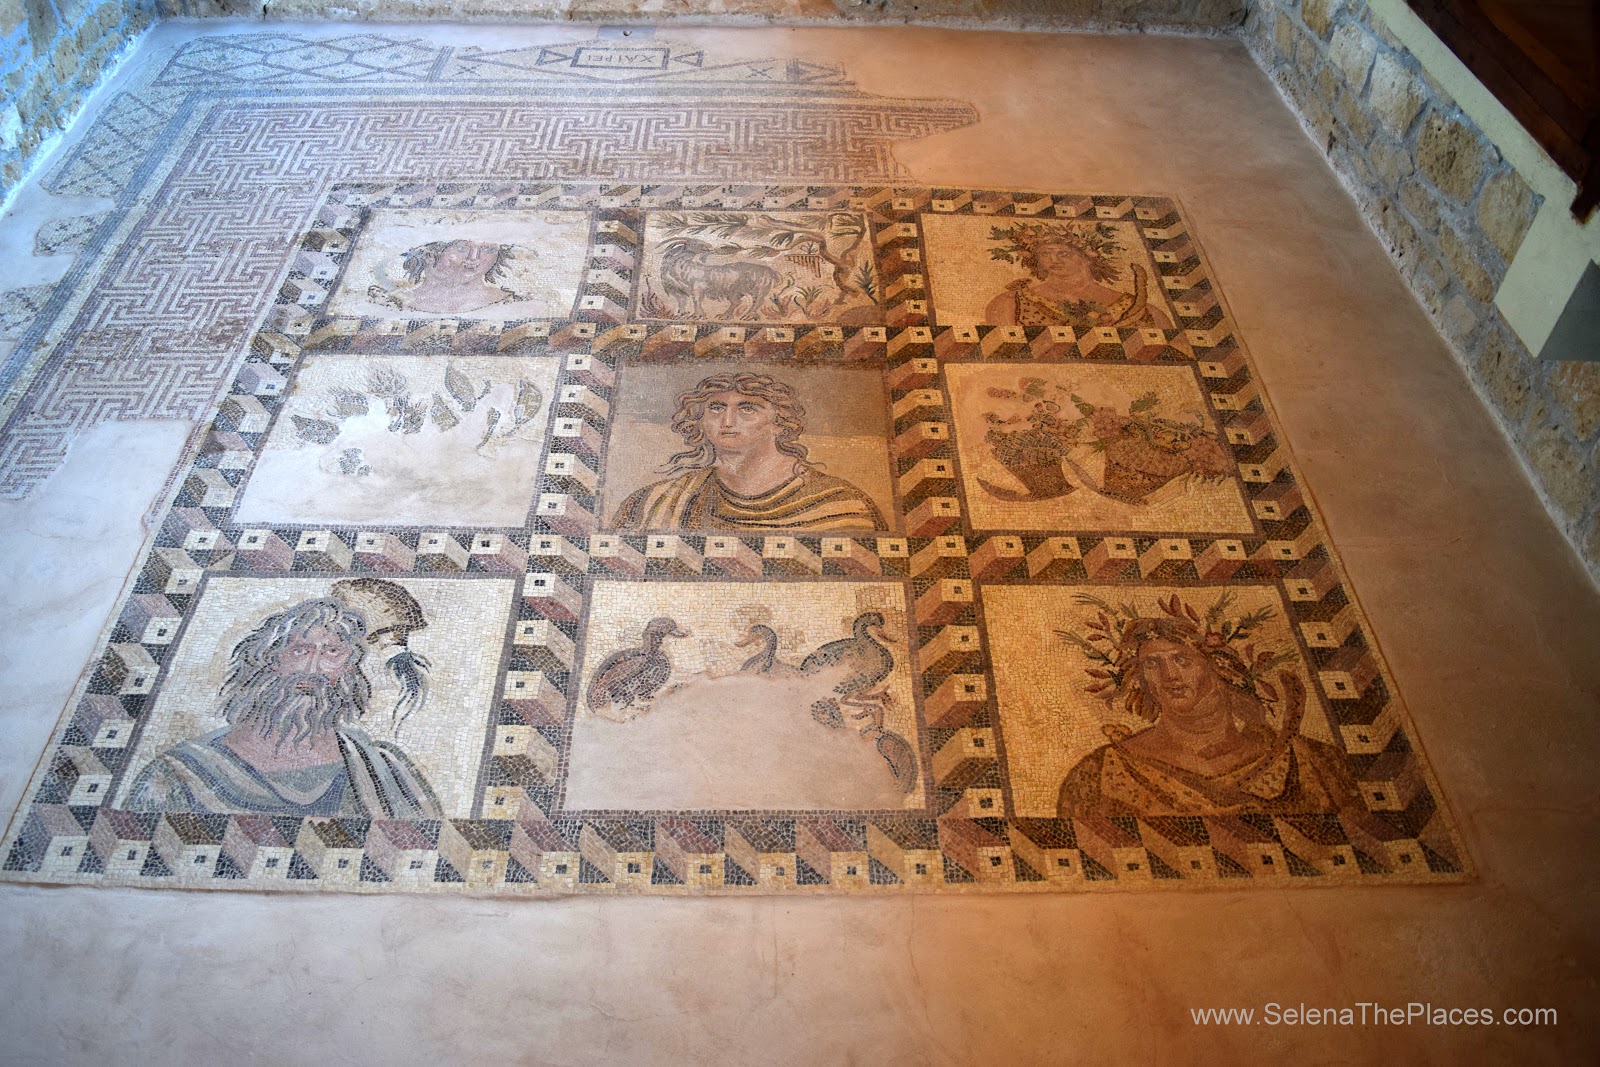 The Ancient Greek Mosaics of Paphos